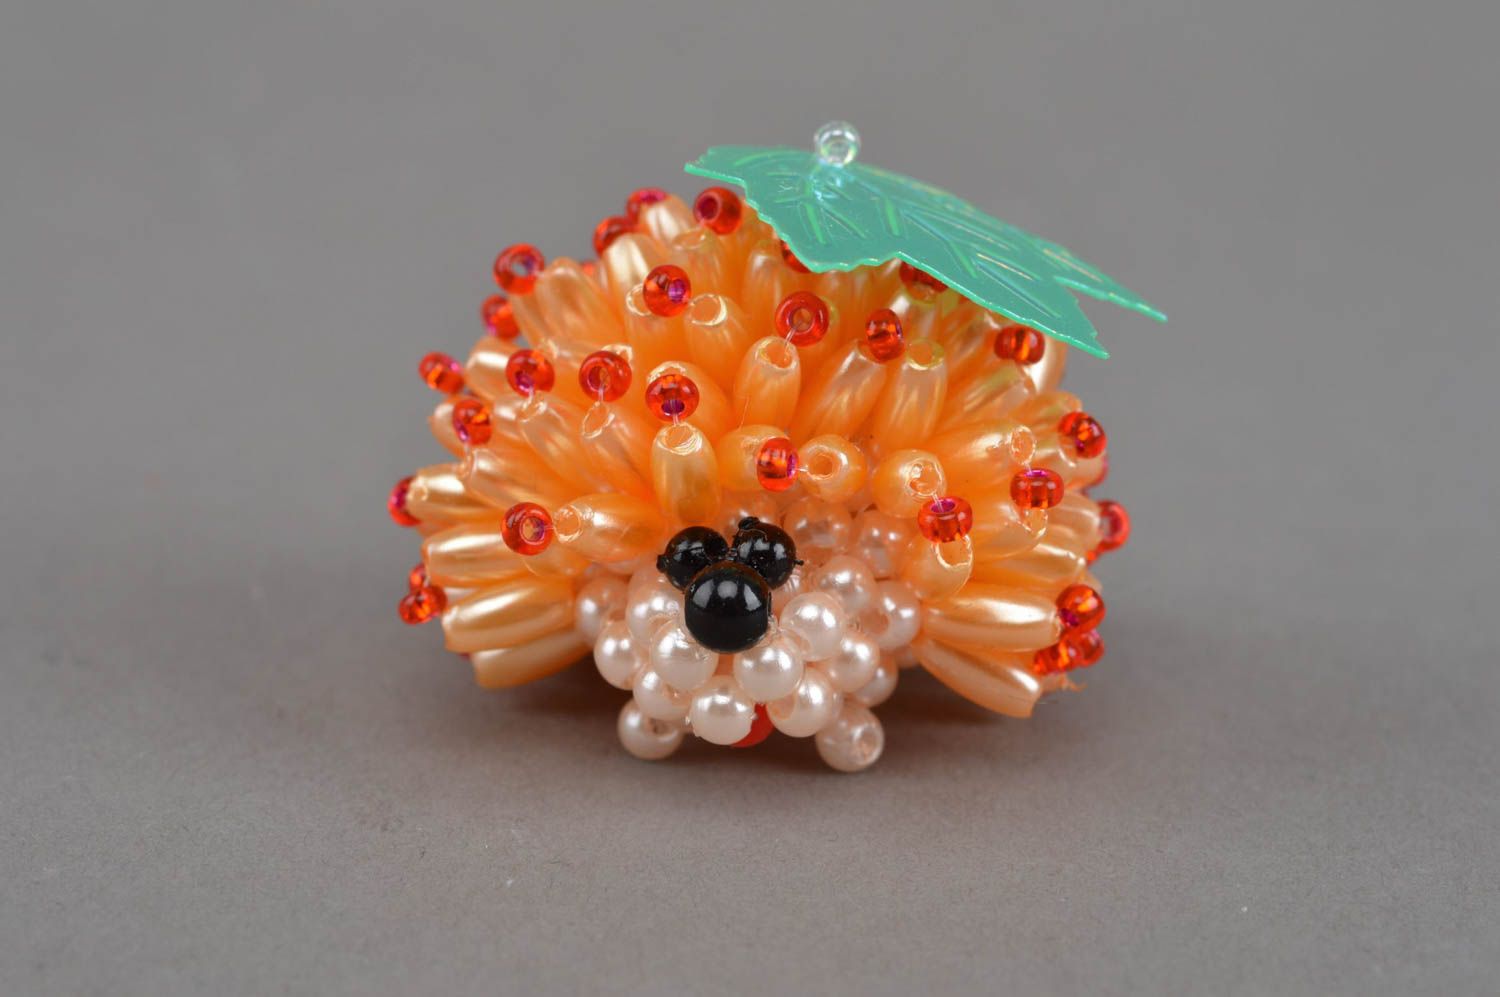 Unusual beautiful handmade designer miniature figurine woven of beads home decor photo 4